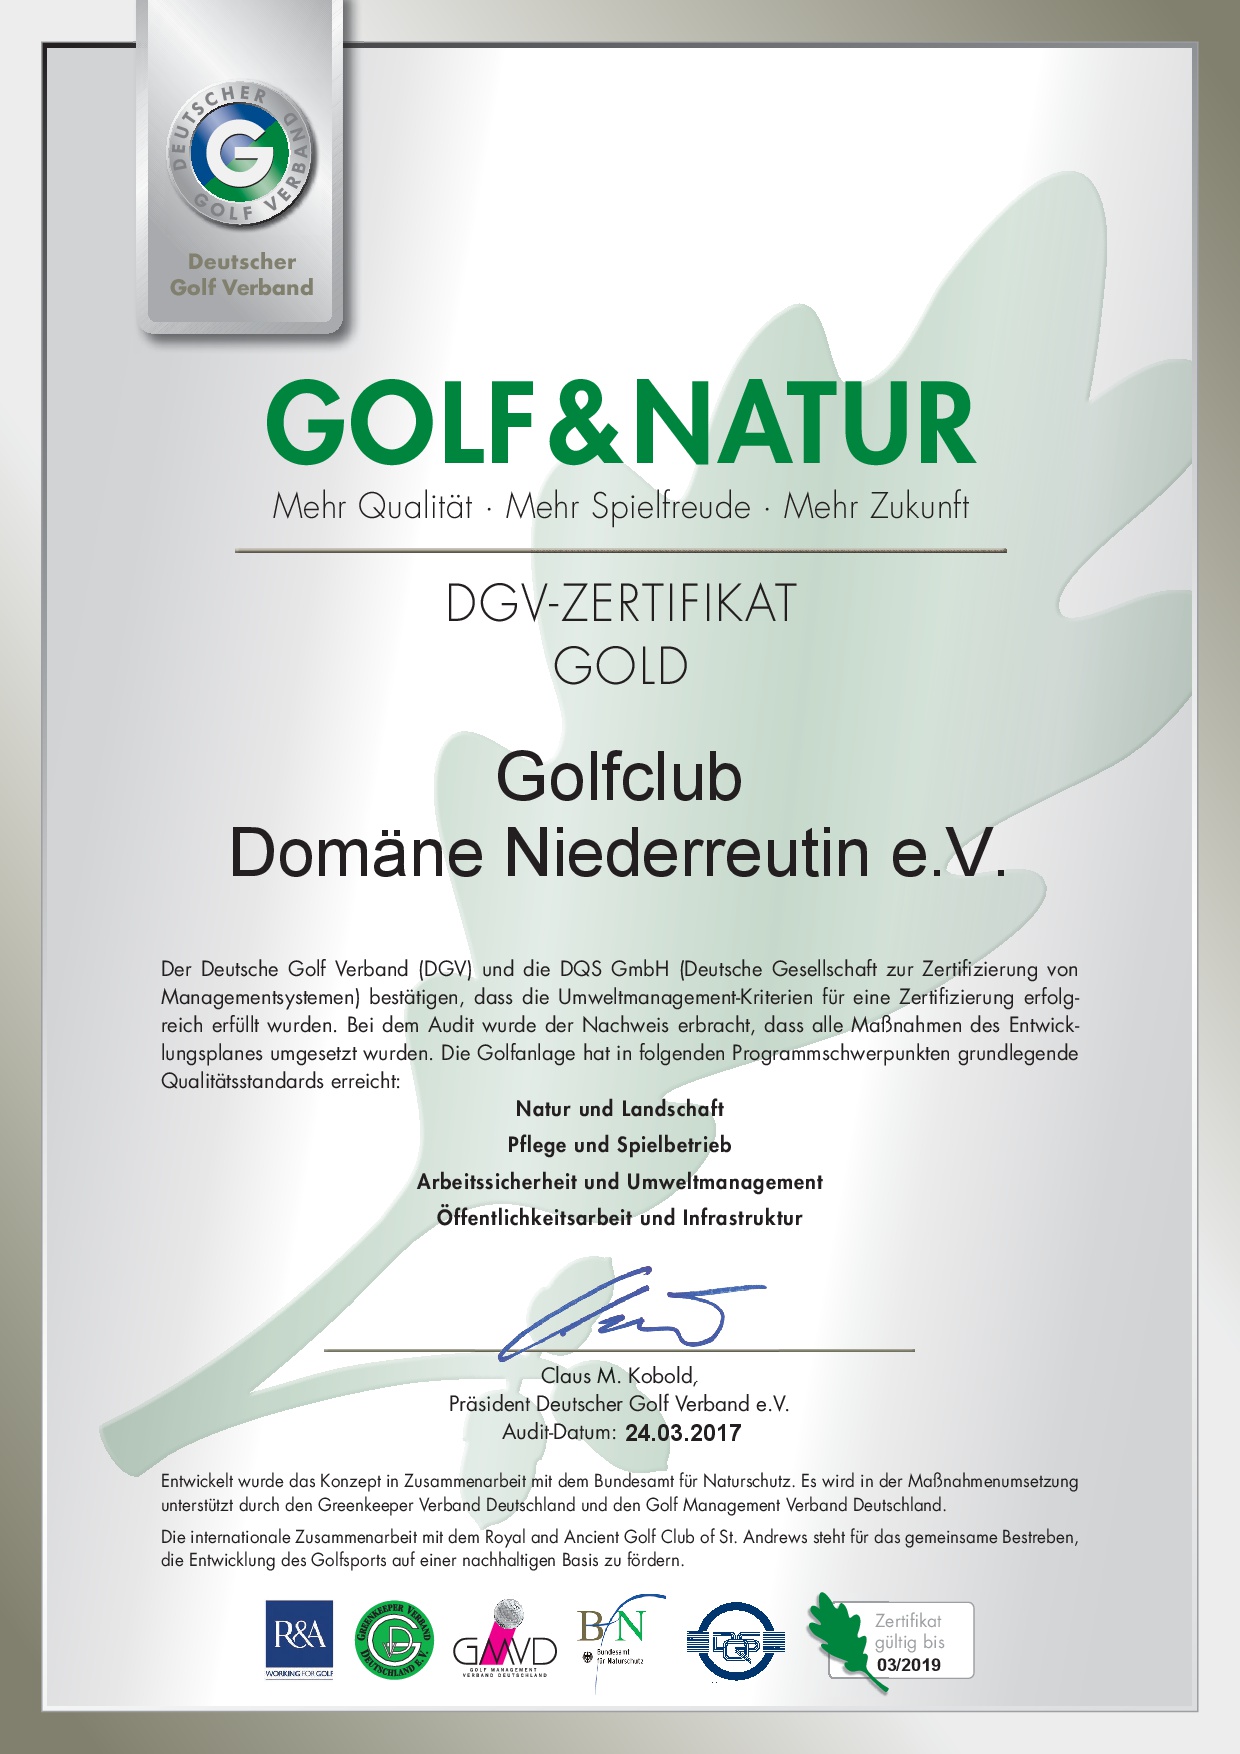 GuN Zertifikat Domne Niederreutin 24 3 2017 Gold